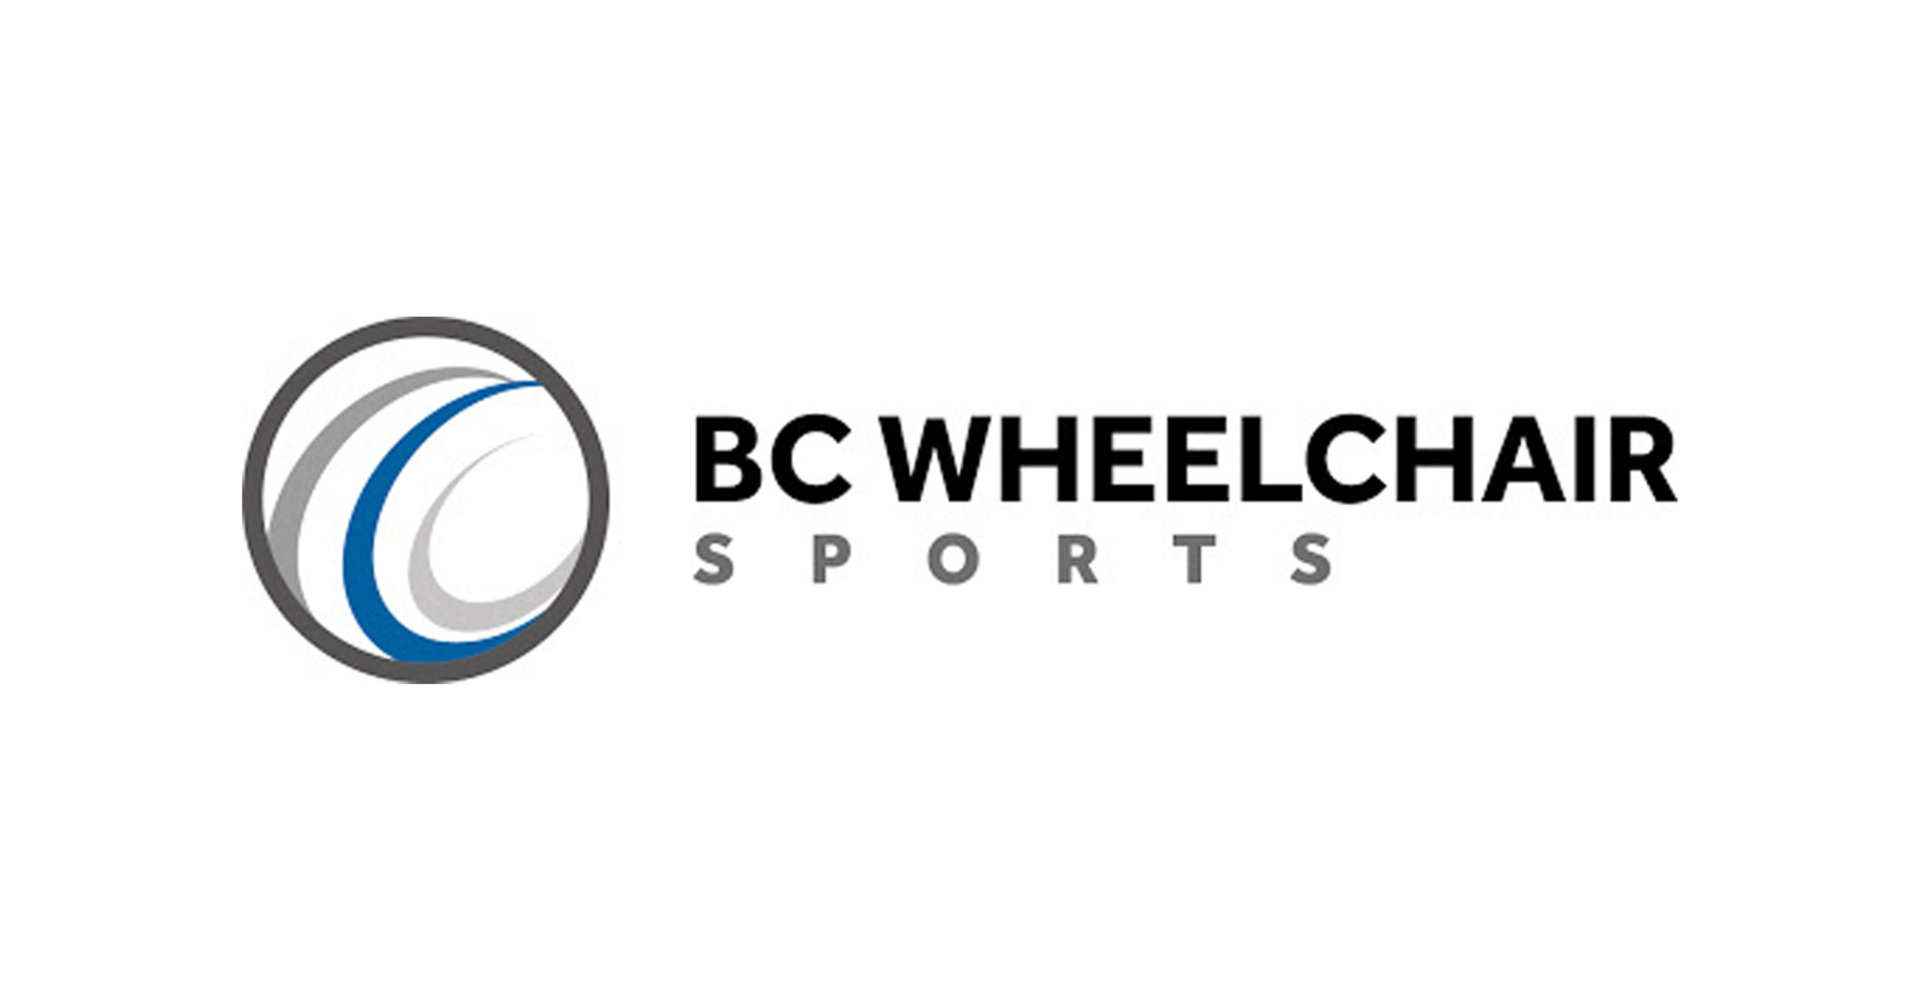 BCWSA is hiring a Wheelchair Rugby Program Coordinator